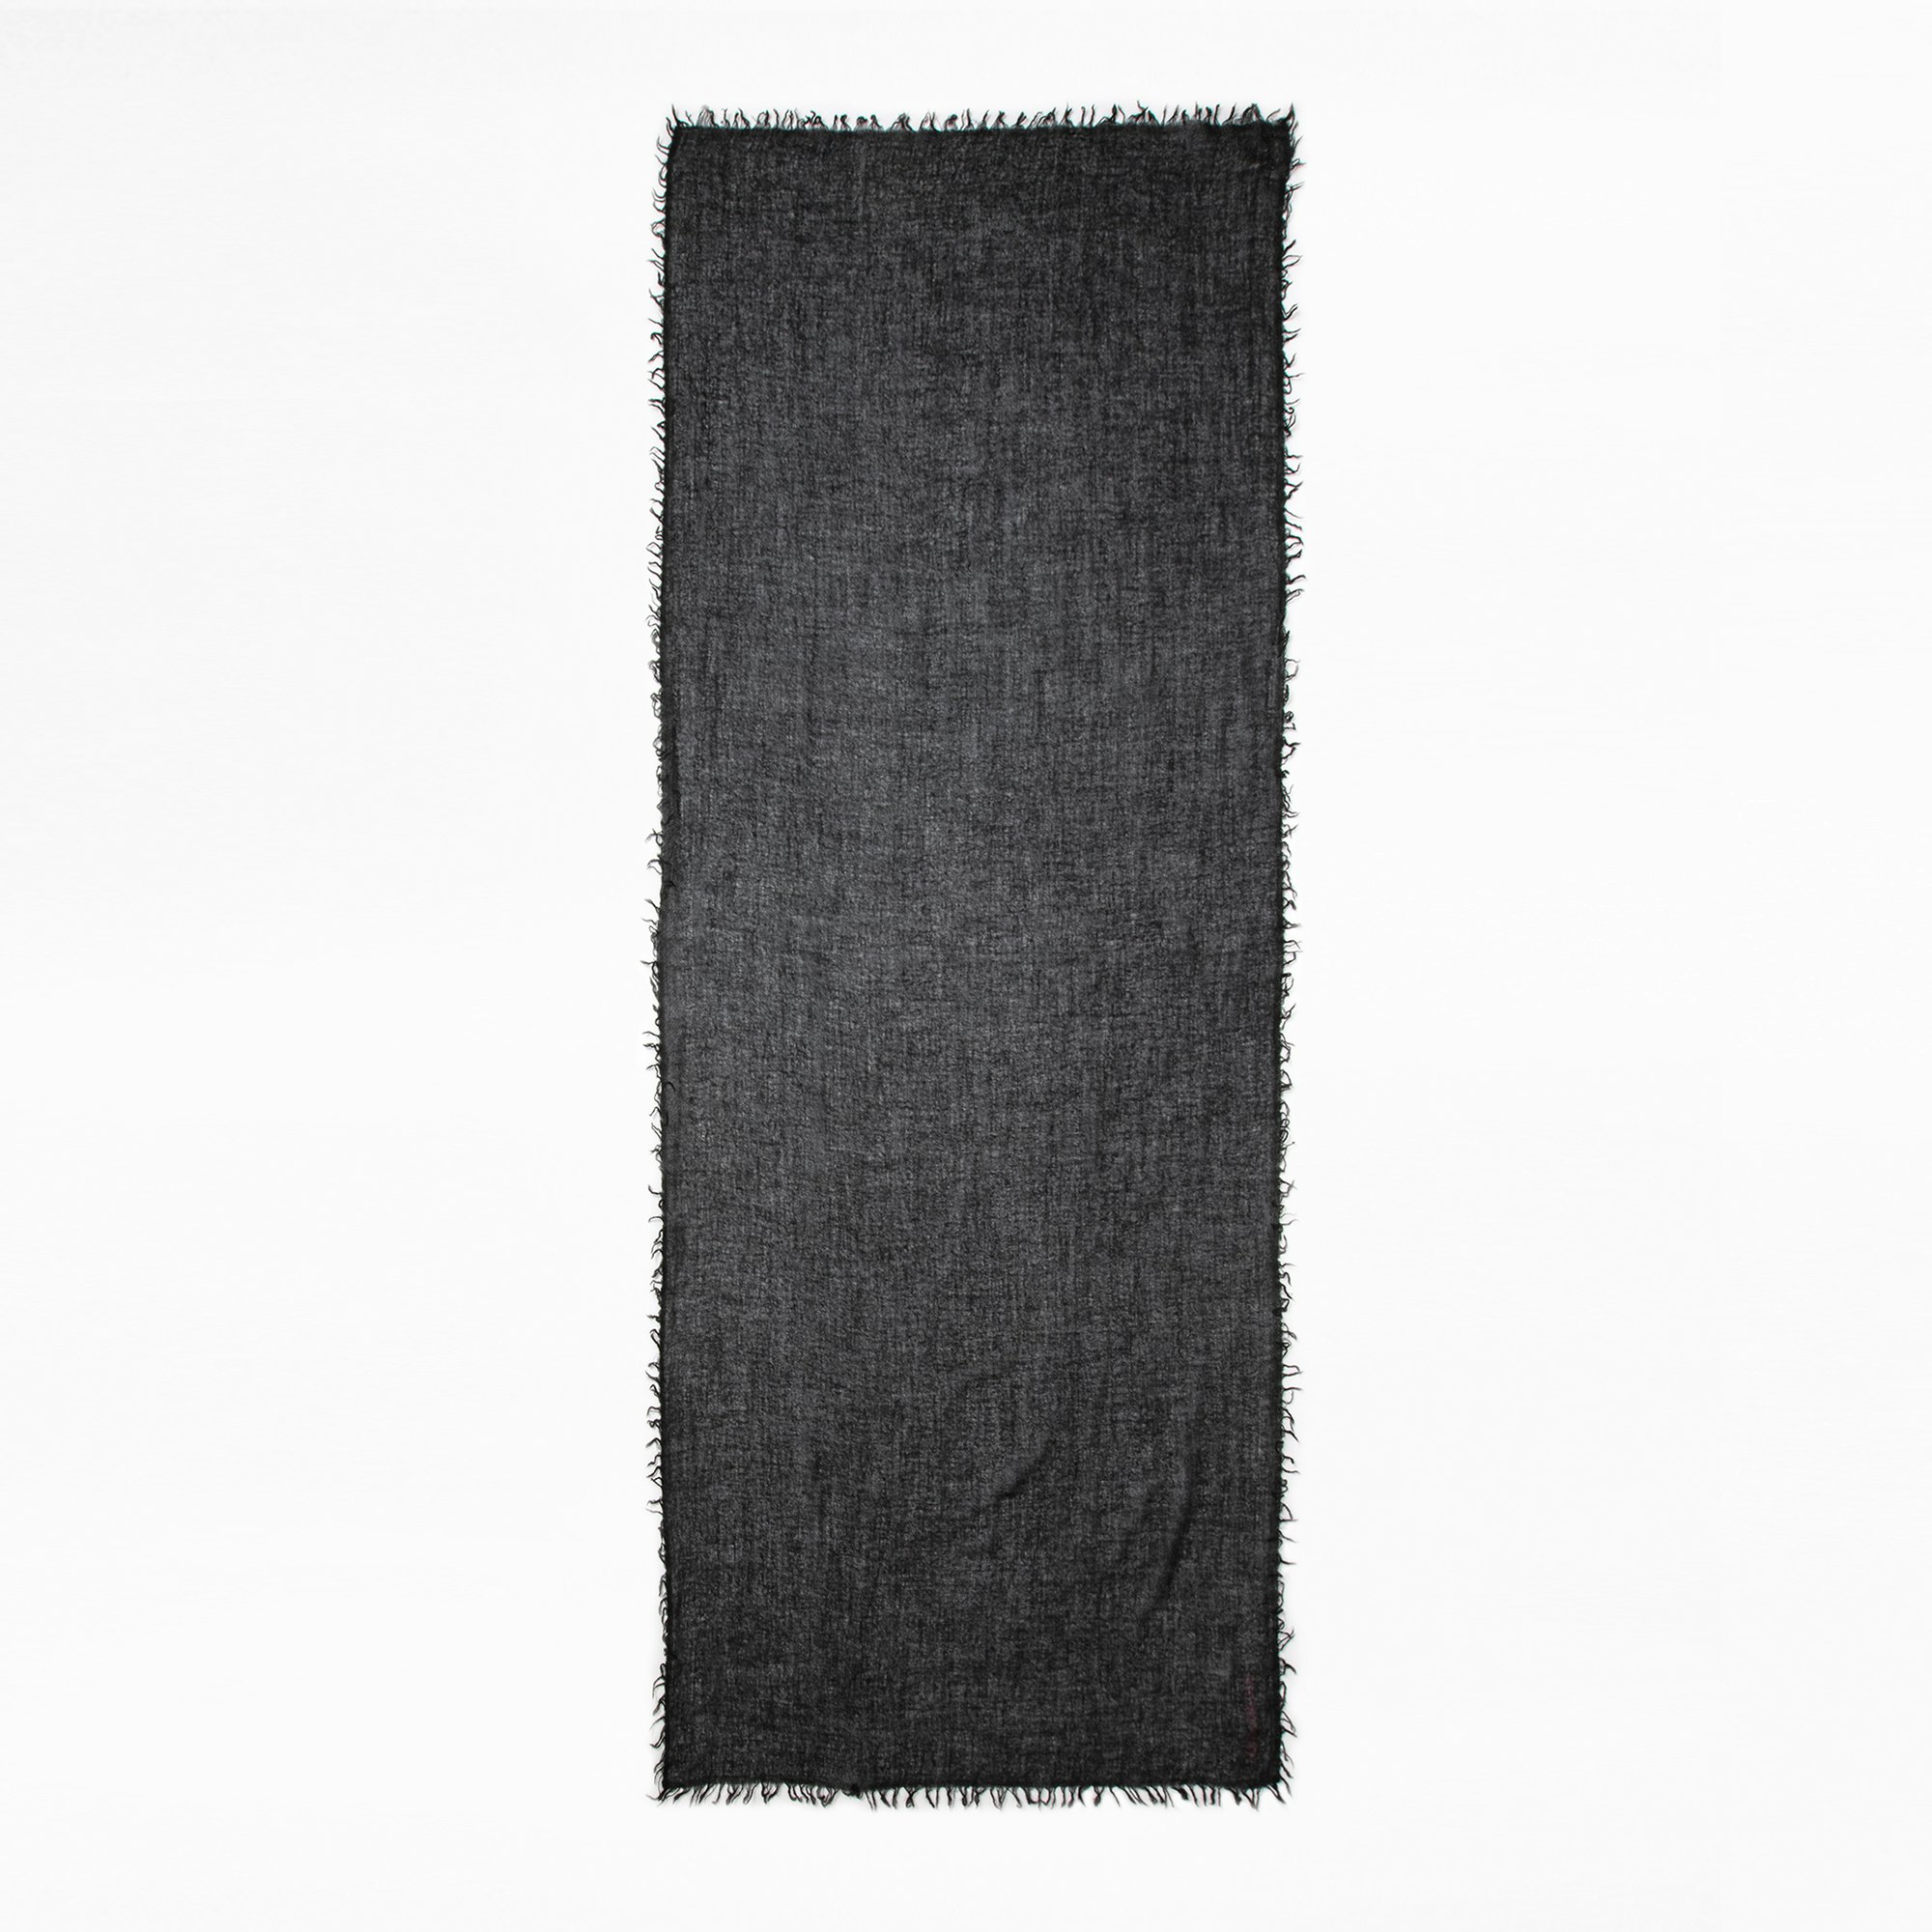 Nuage Scarf - Women’s black cashmere scarf